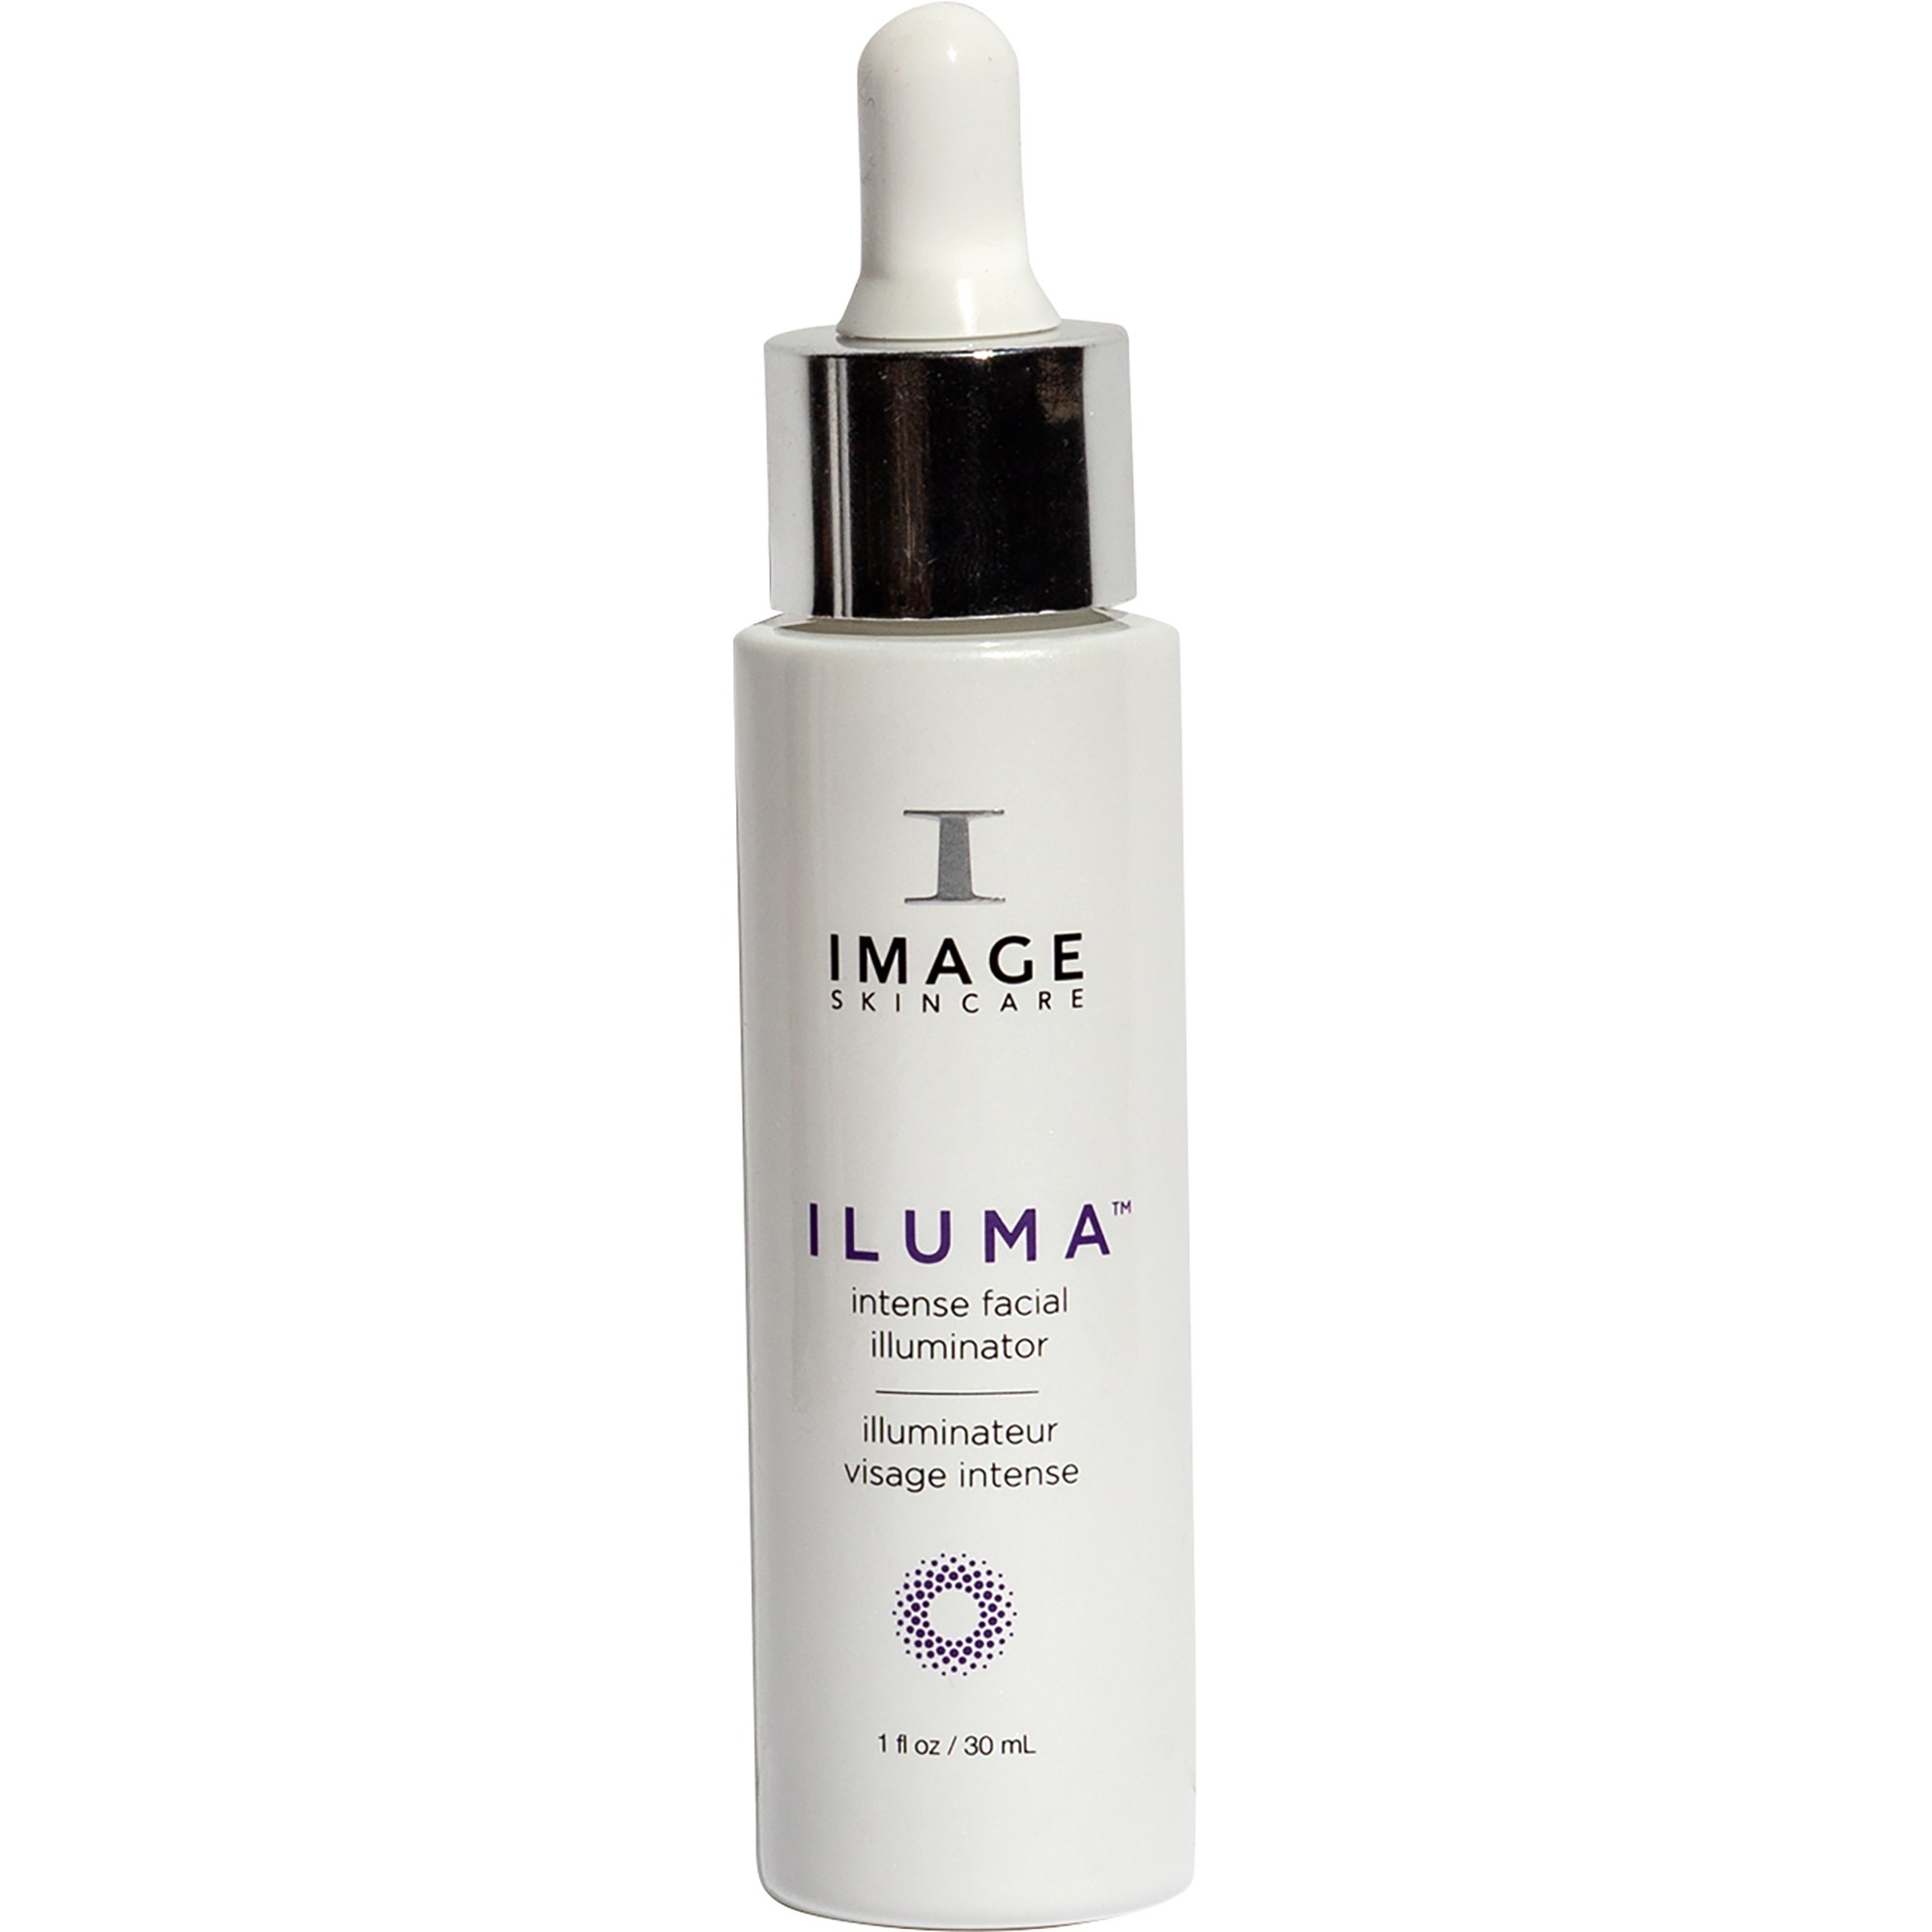 IMAGE Skincare Iluma® Intense Facial Iluminator 30 ml